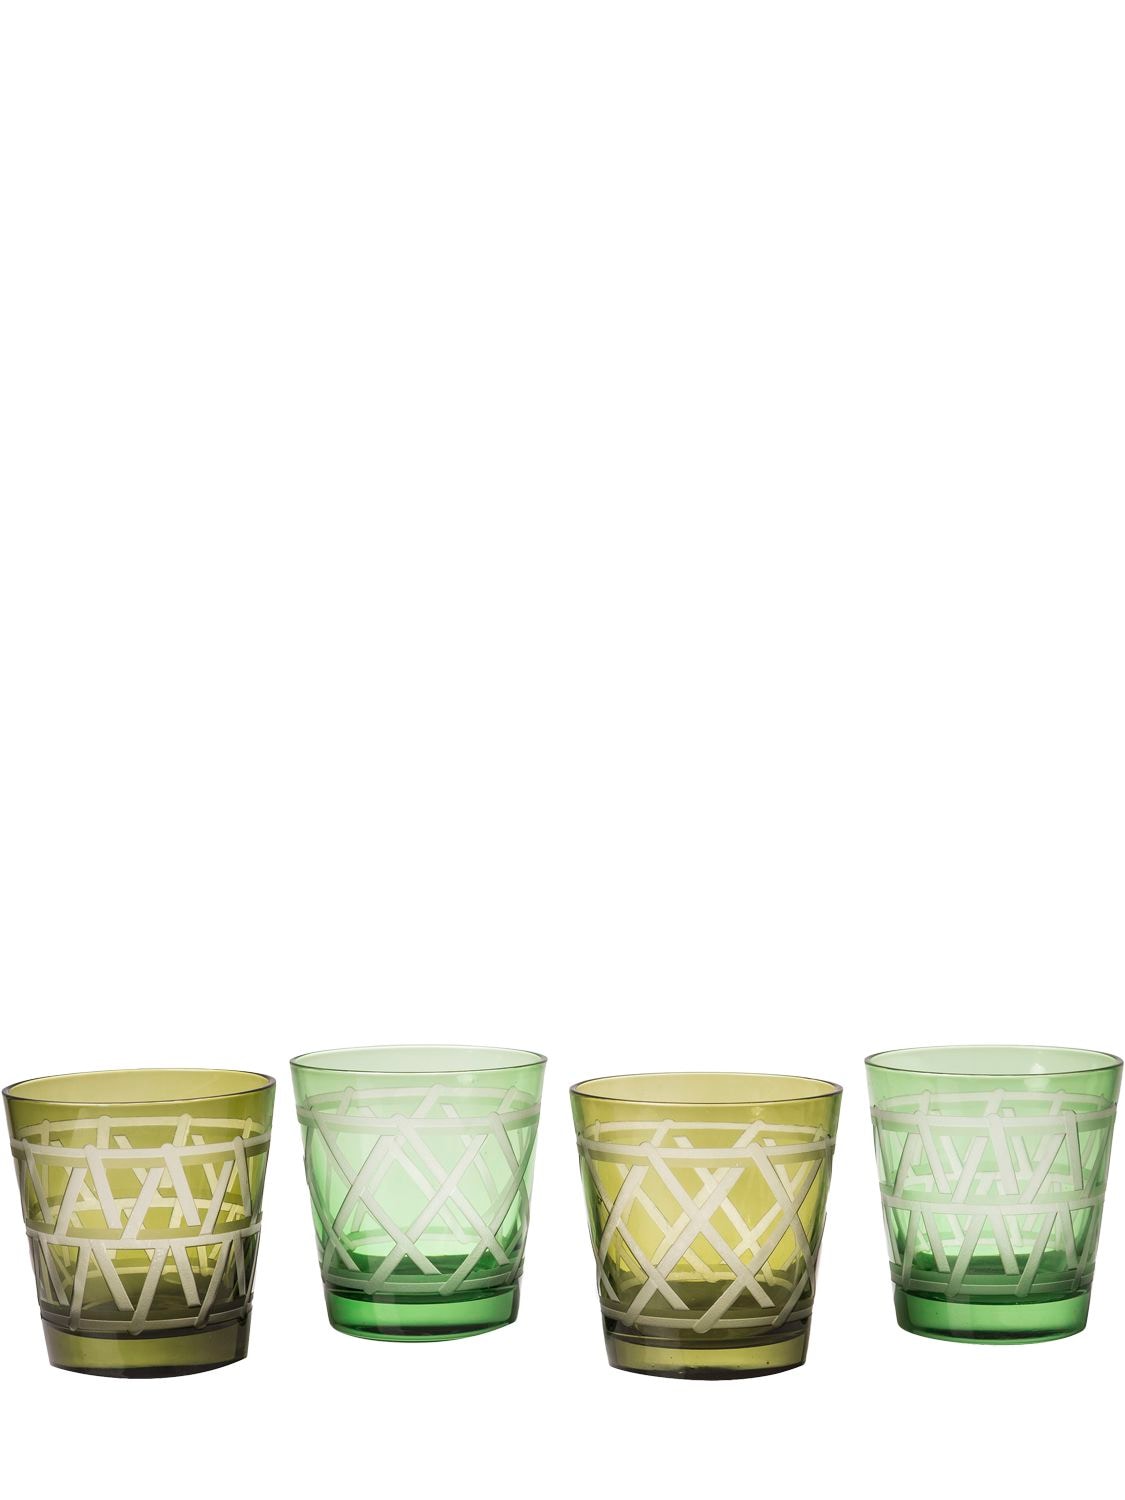 Polspotten Tie Up平底玻璃杯4个套装 In Multi-colour